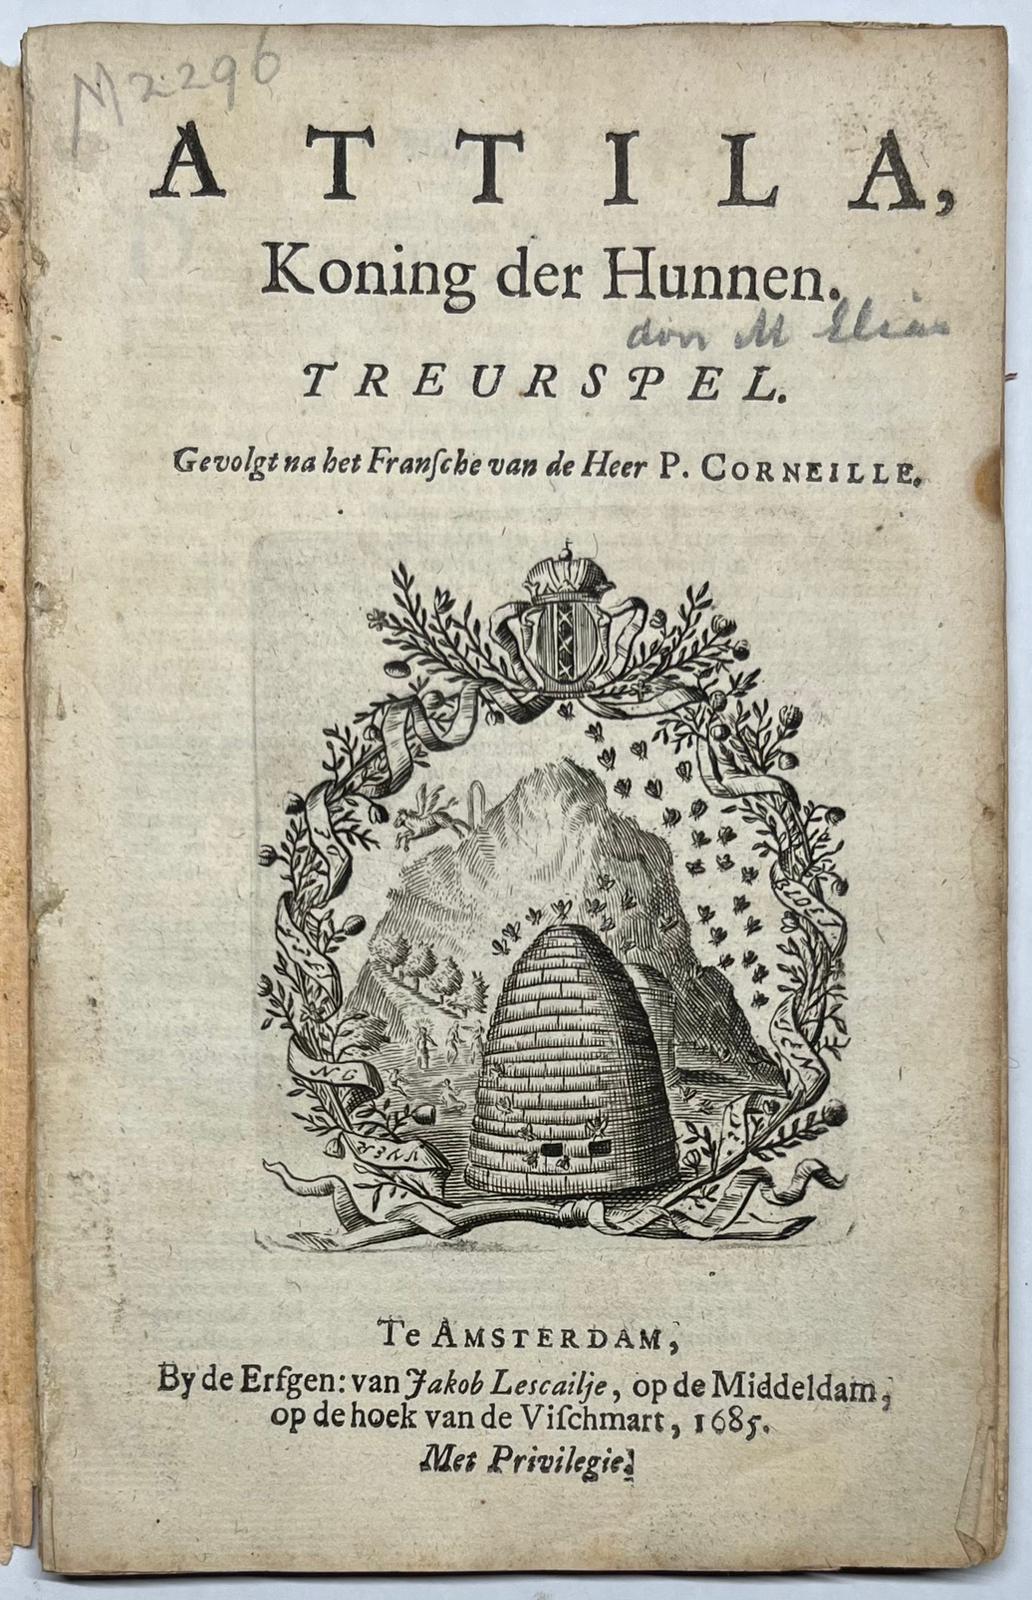 Elias, Michiel [after Corneille, P] - [Theatre, 1685, translation] Attila, Koning der Hunnen. Treurspel. Amsterdam, Erfg. J. Lescailje, 1685, 64 pp.